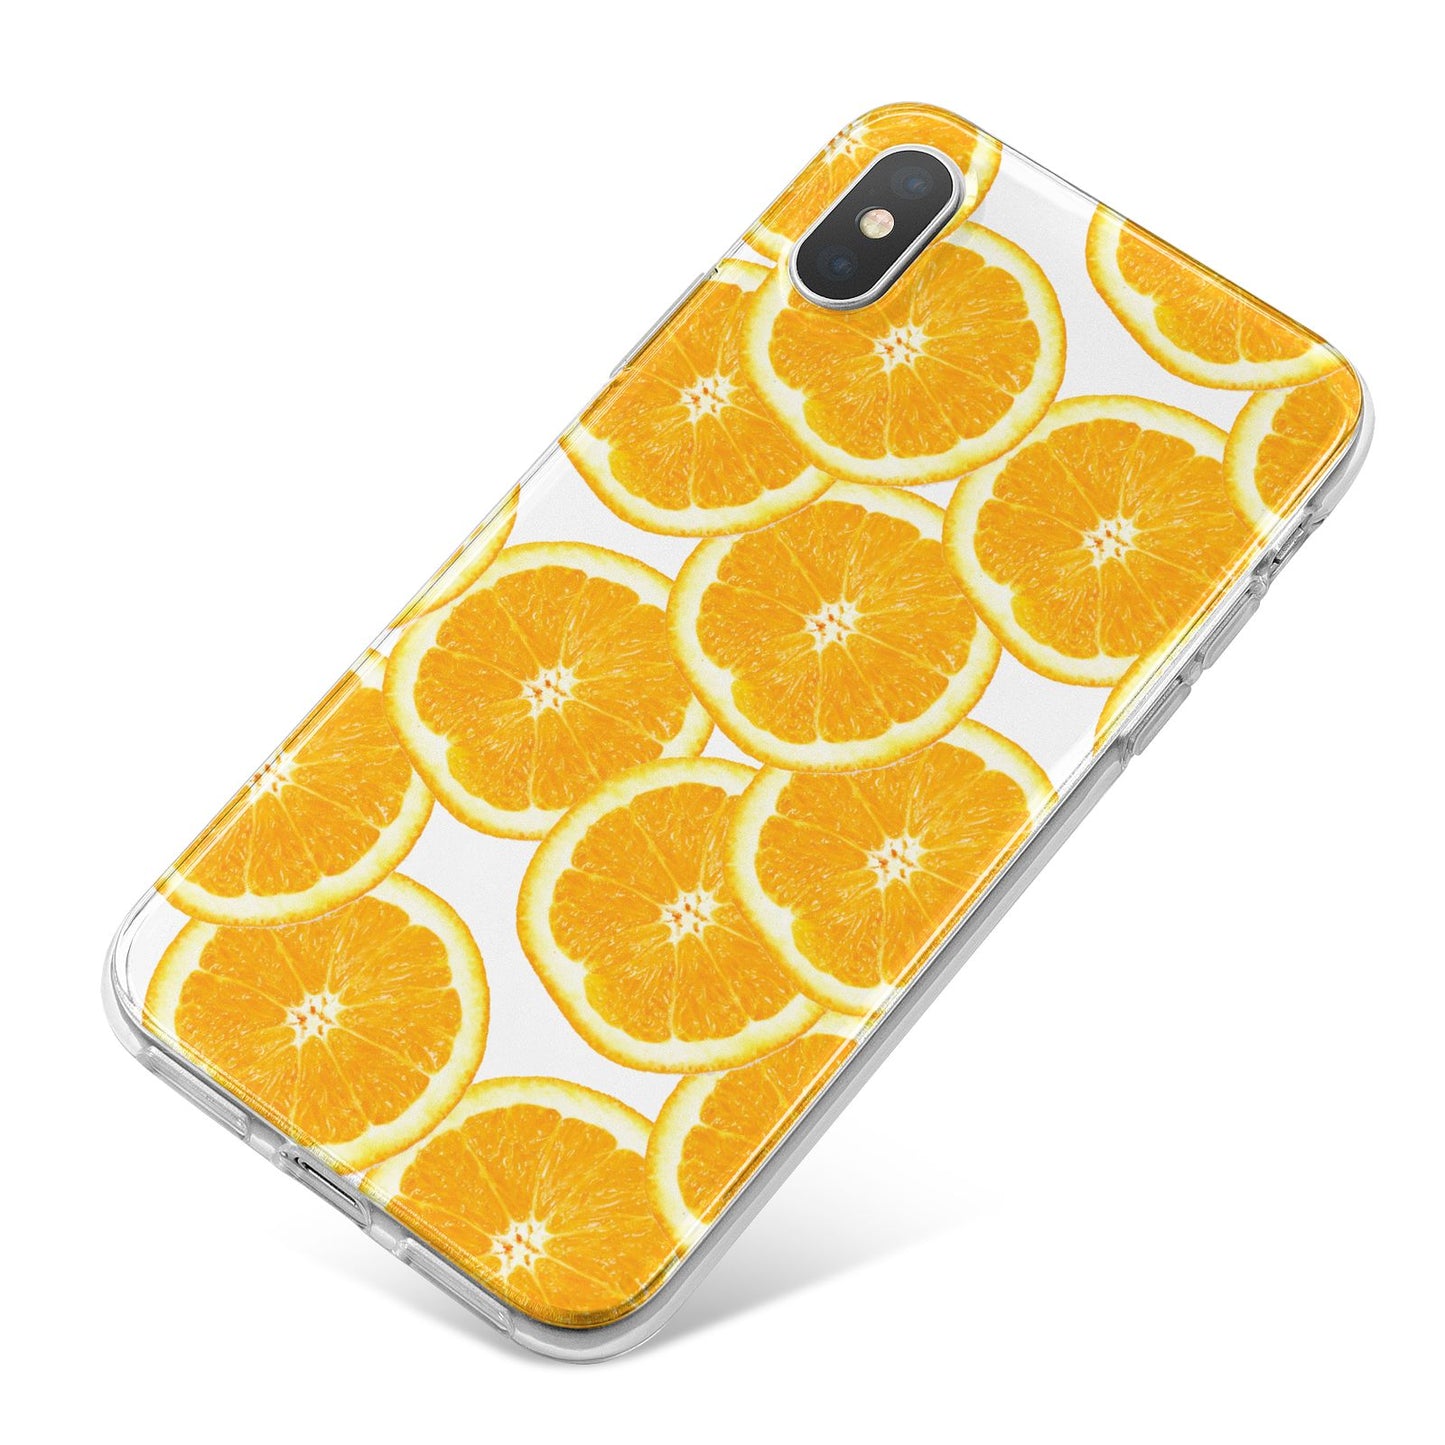 Orange Fruit Slices iPhone X Bumper Case on Silver iPhone